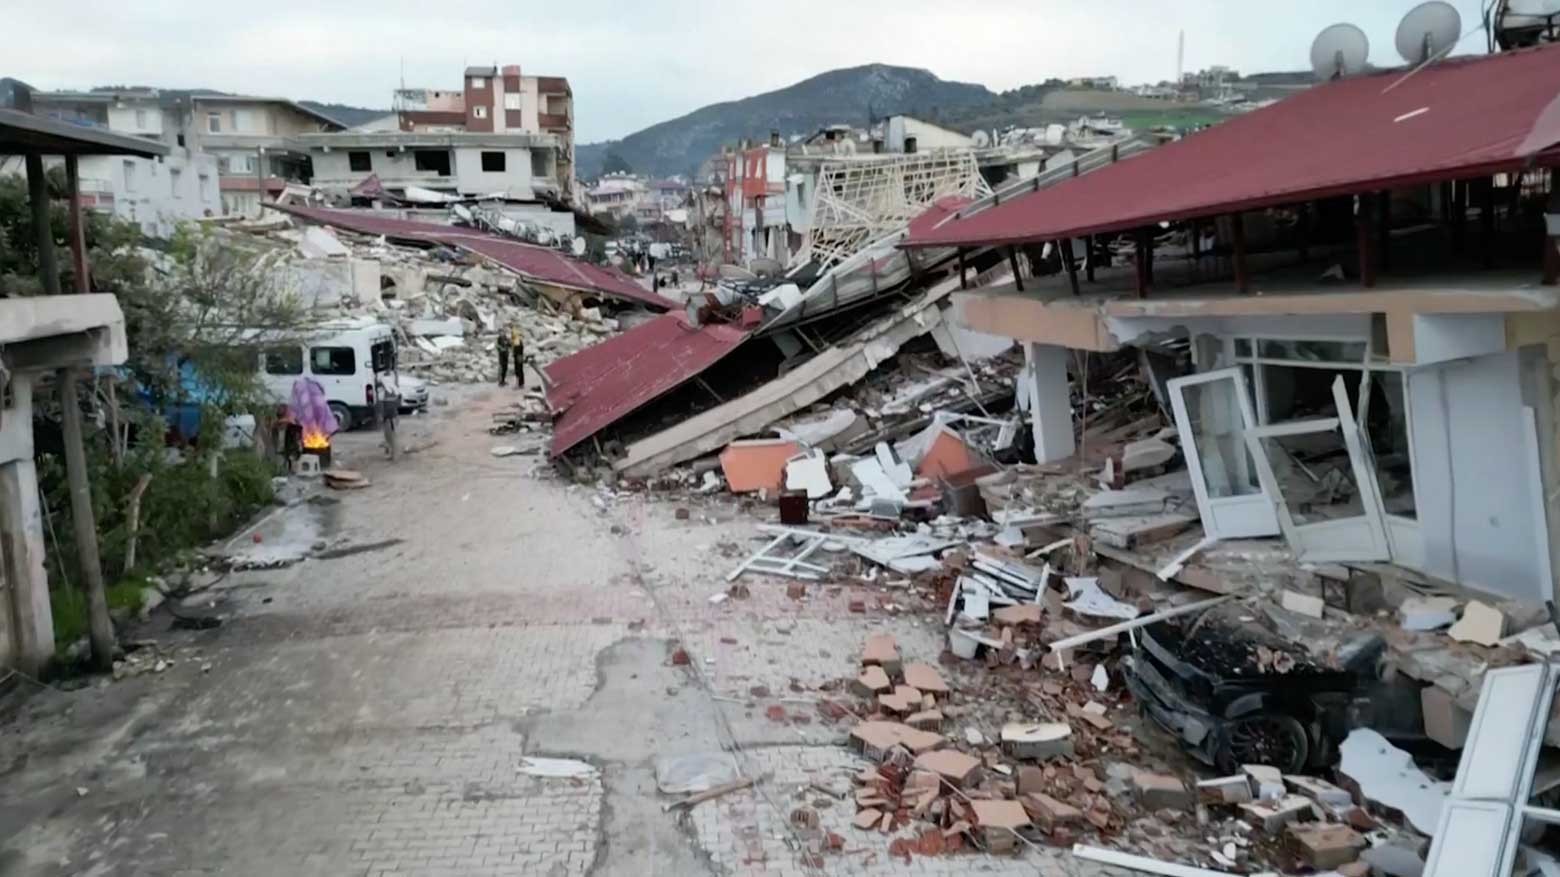 Expert blames 'pancake' collapses for Turkey quake carnage